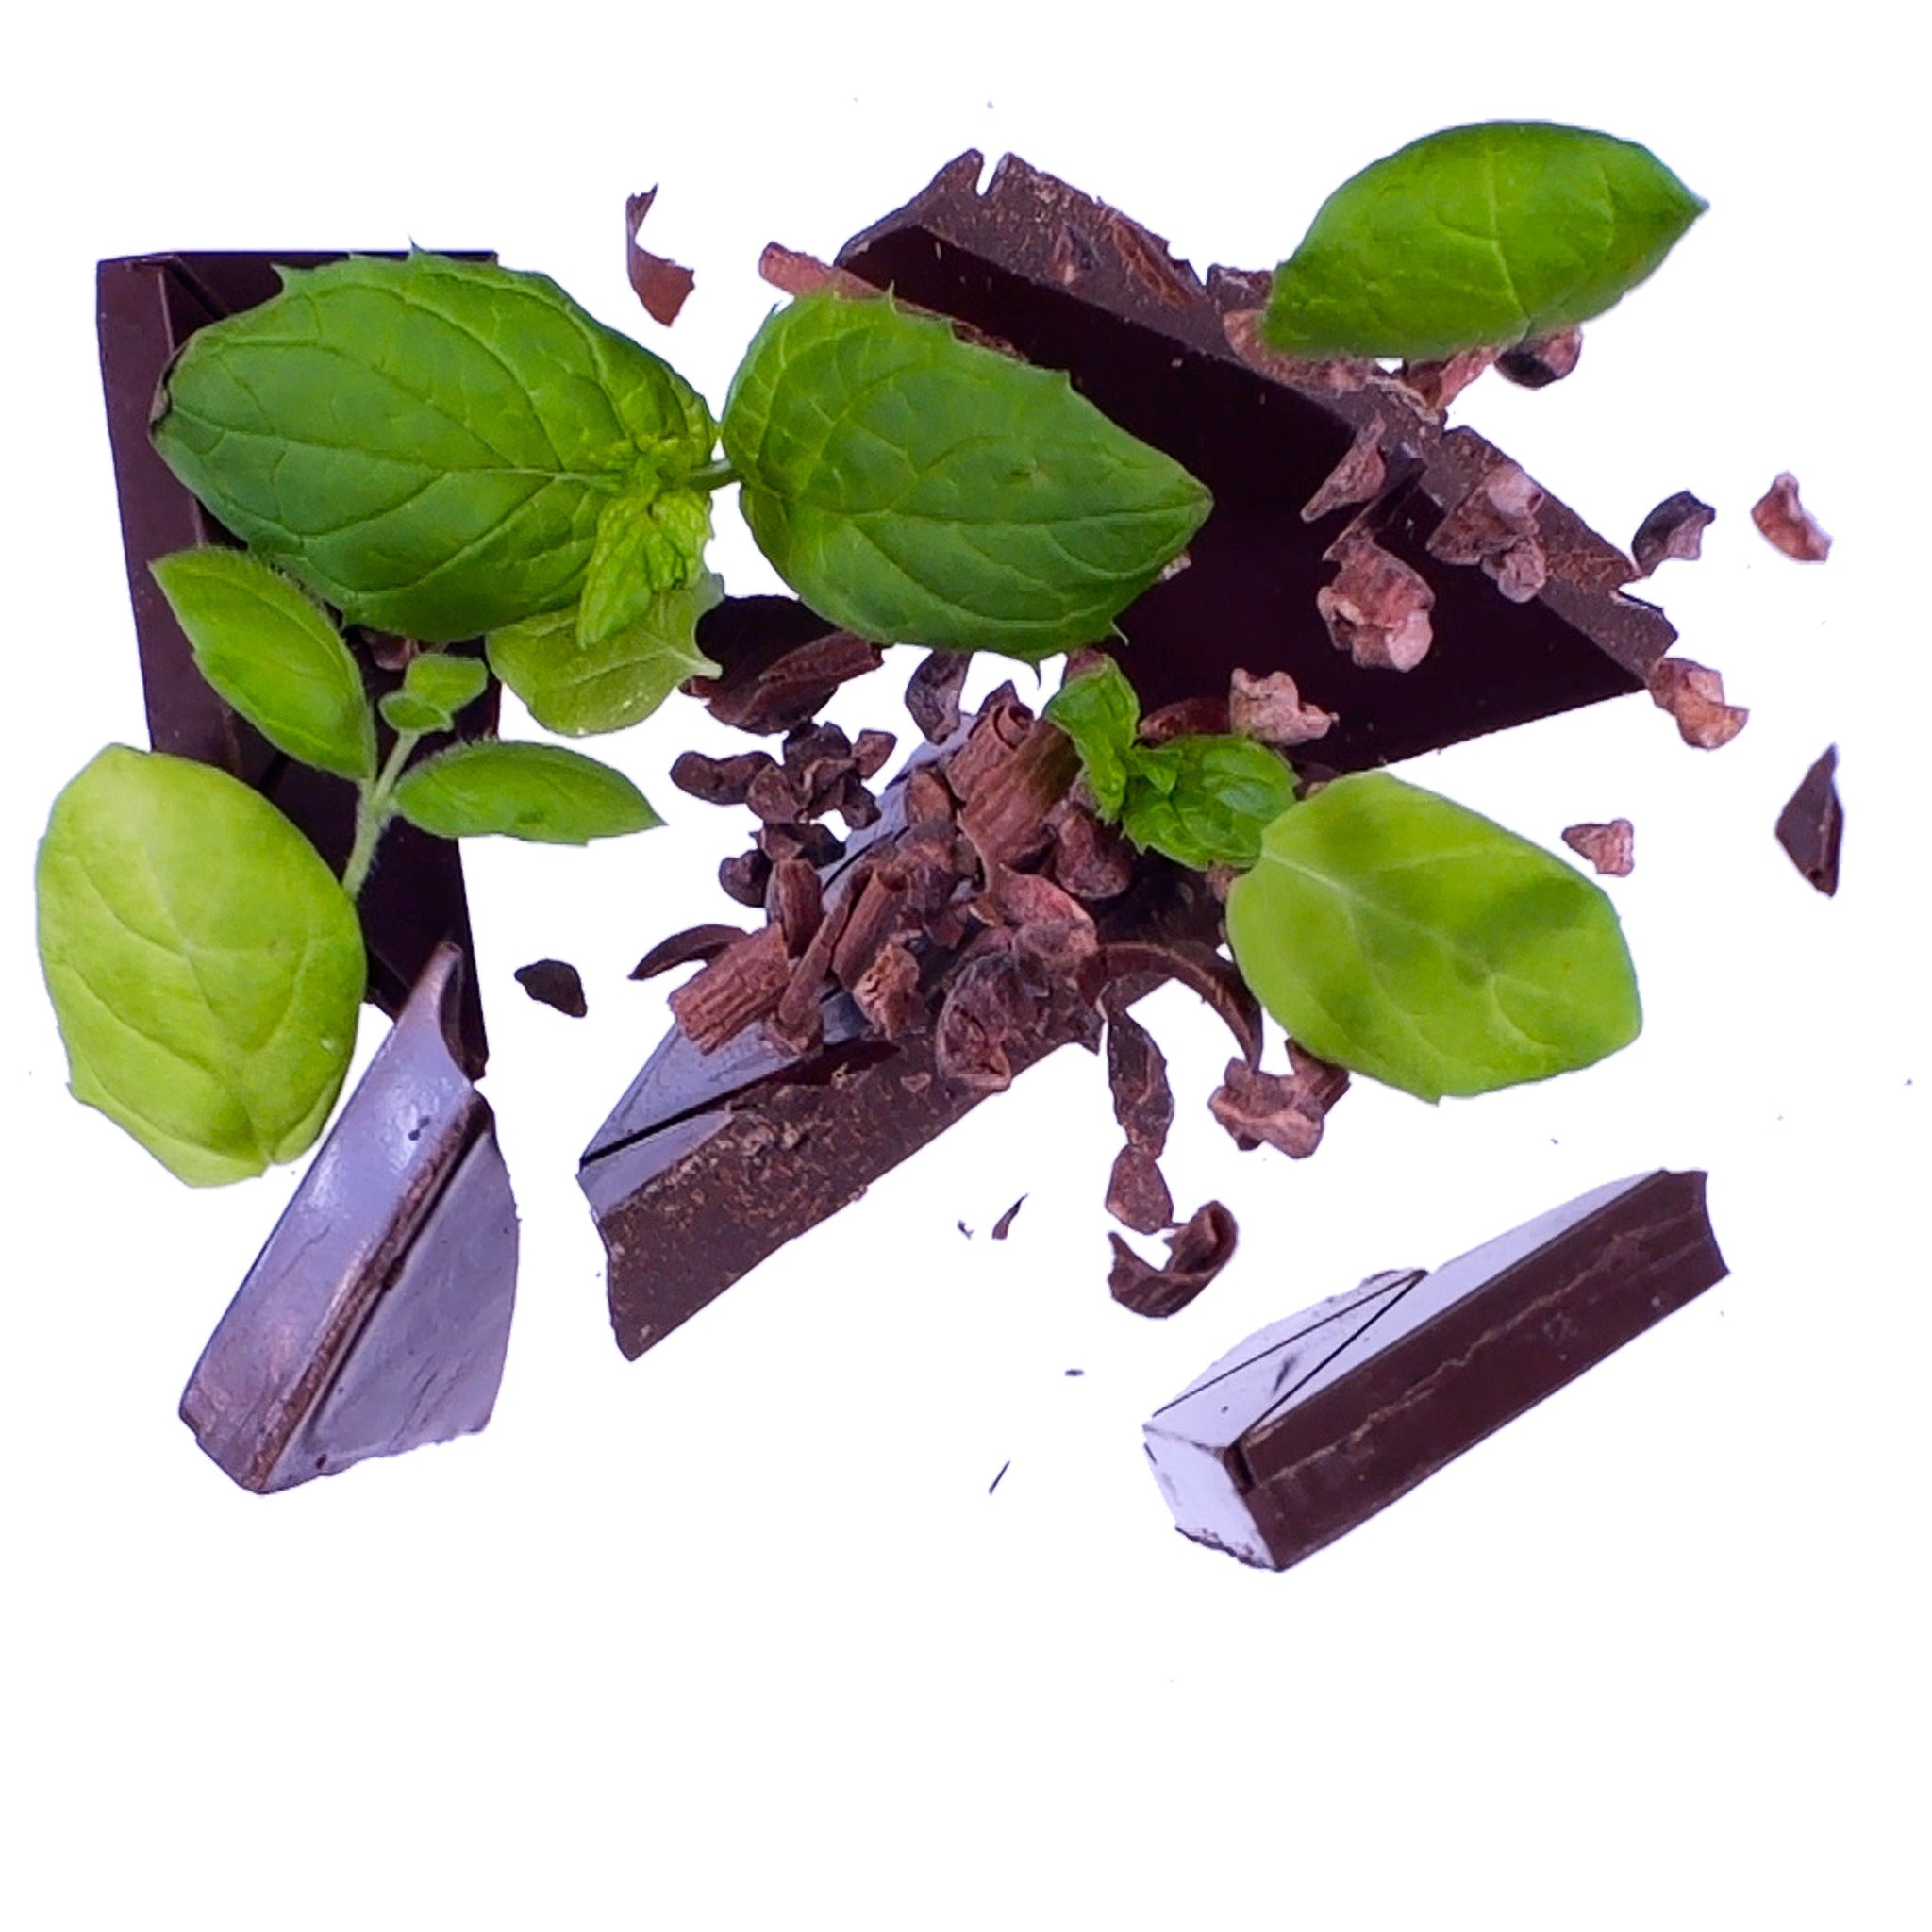 Goodio organic vegan Mint chocolate